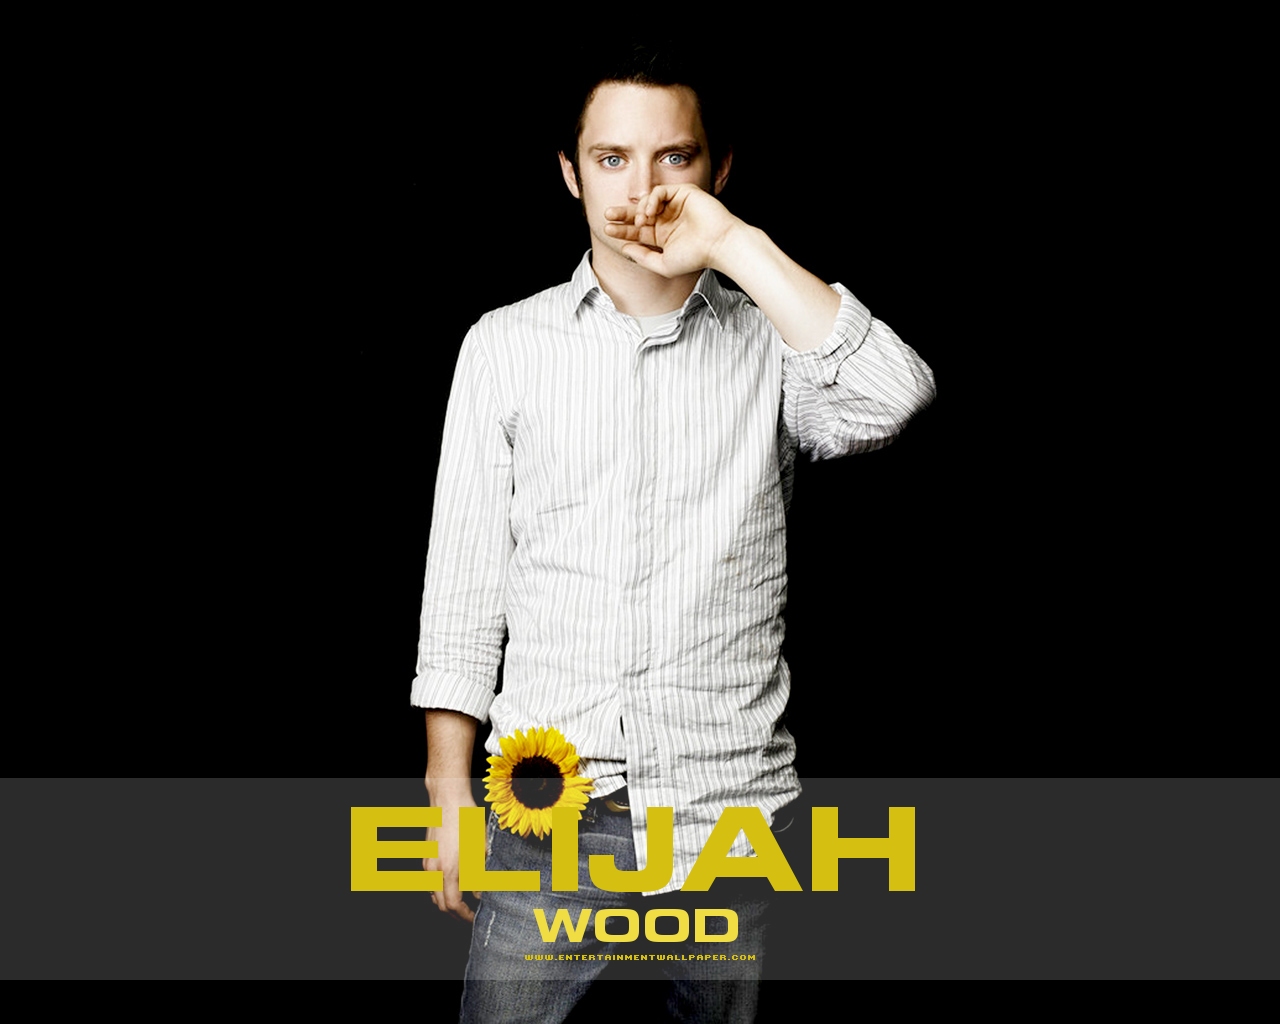 Elijah Wood Image HD Wallpaper And Background Photos